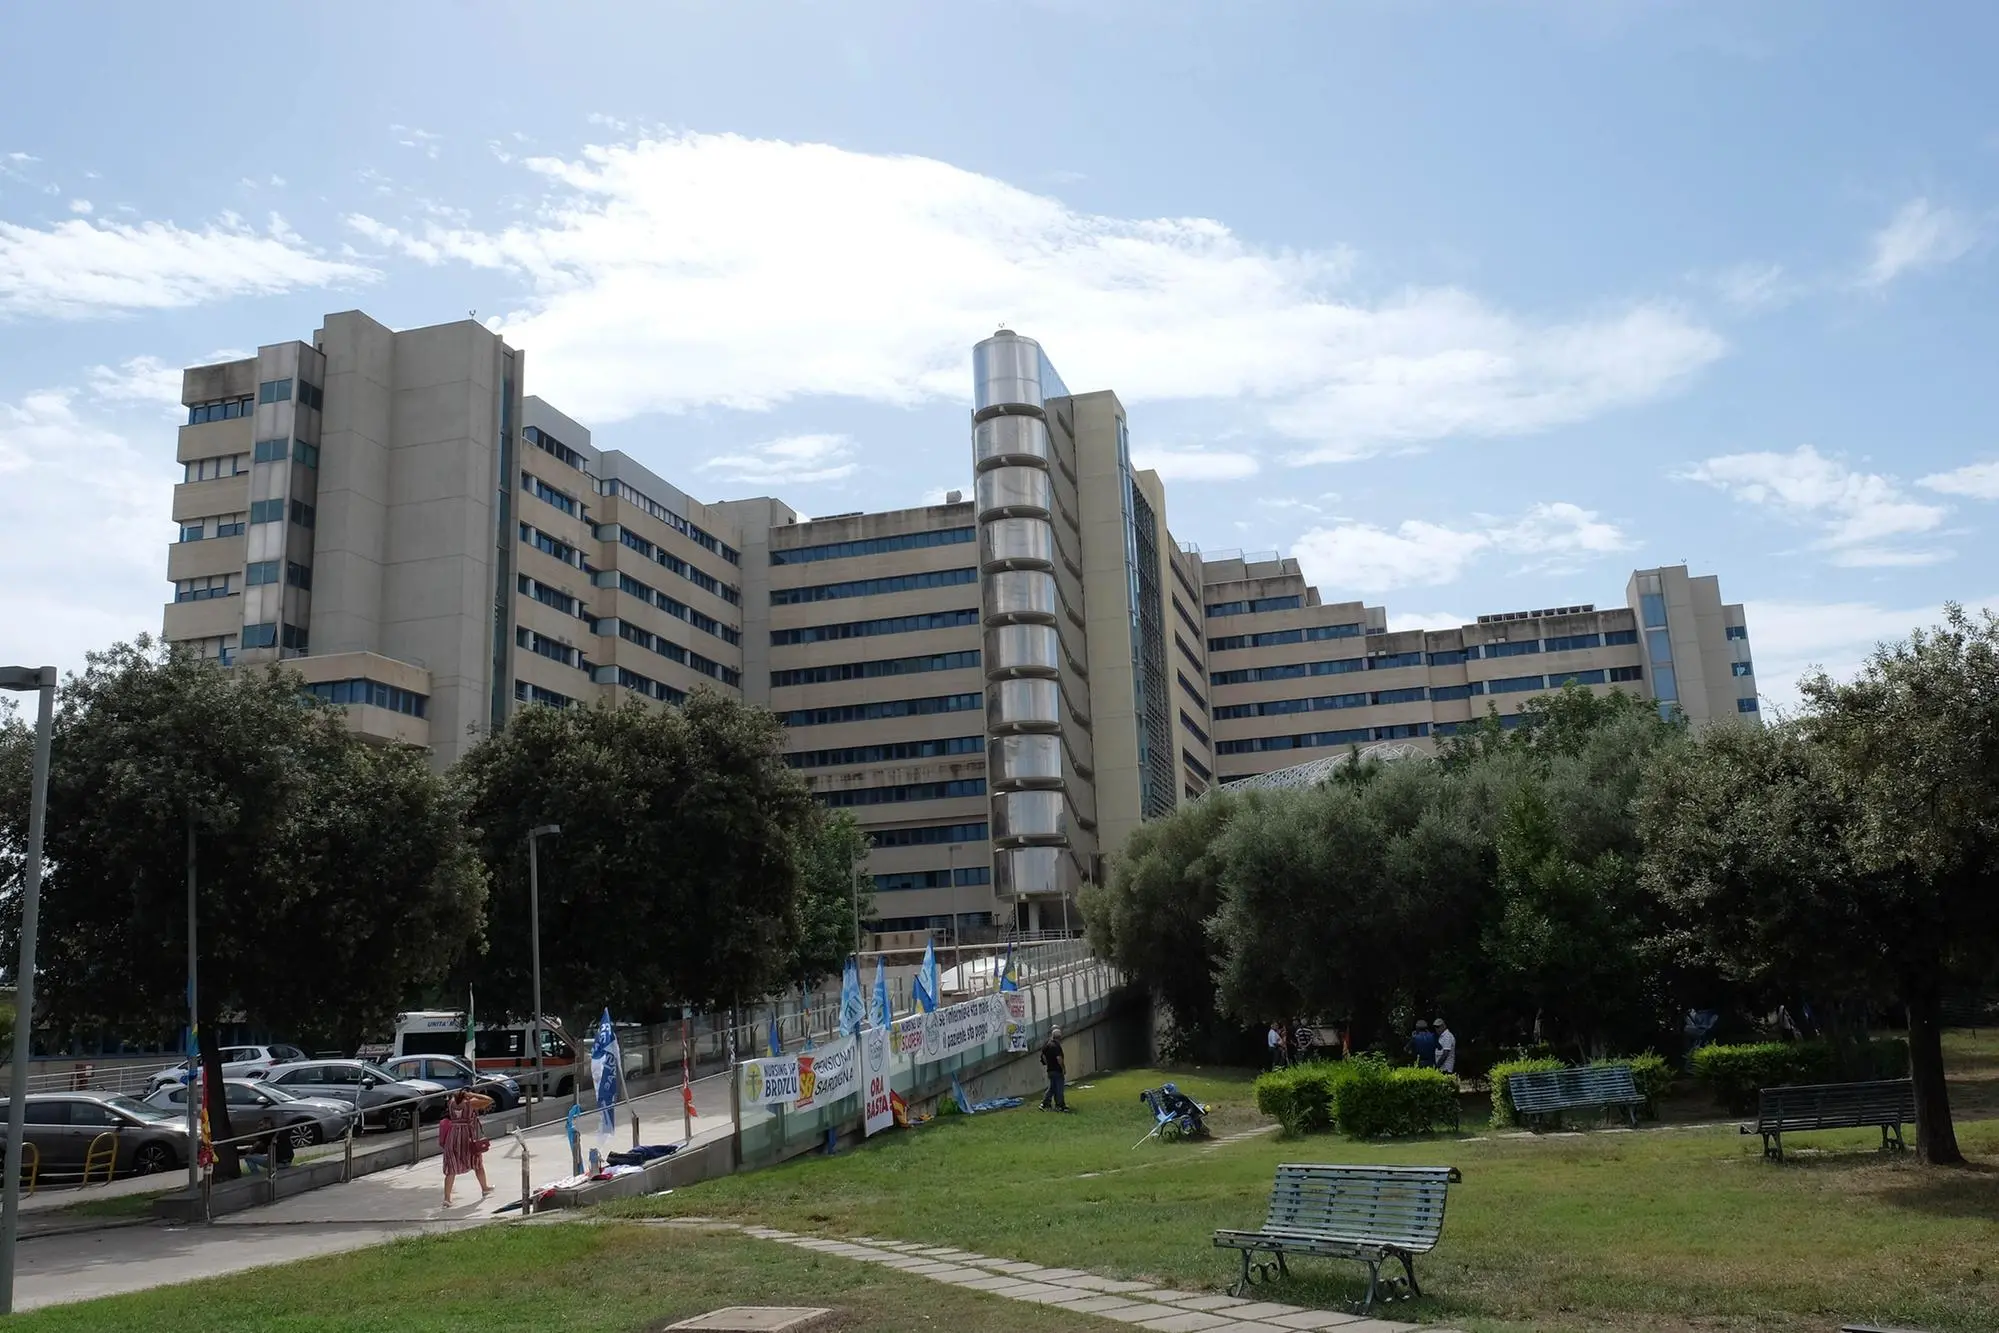 L'ospedale Brotzu di Cagliari (Archivio L'Unione Sarda/Giuseppe Ungari)